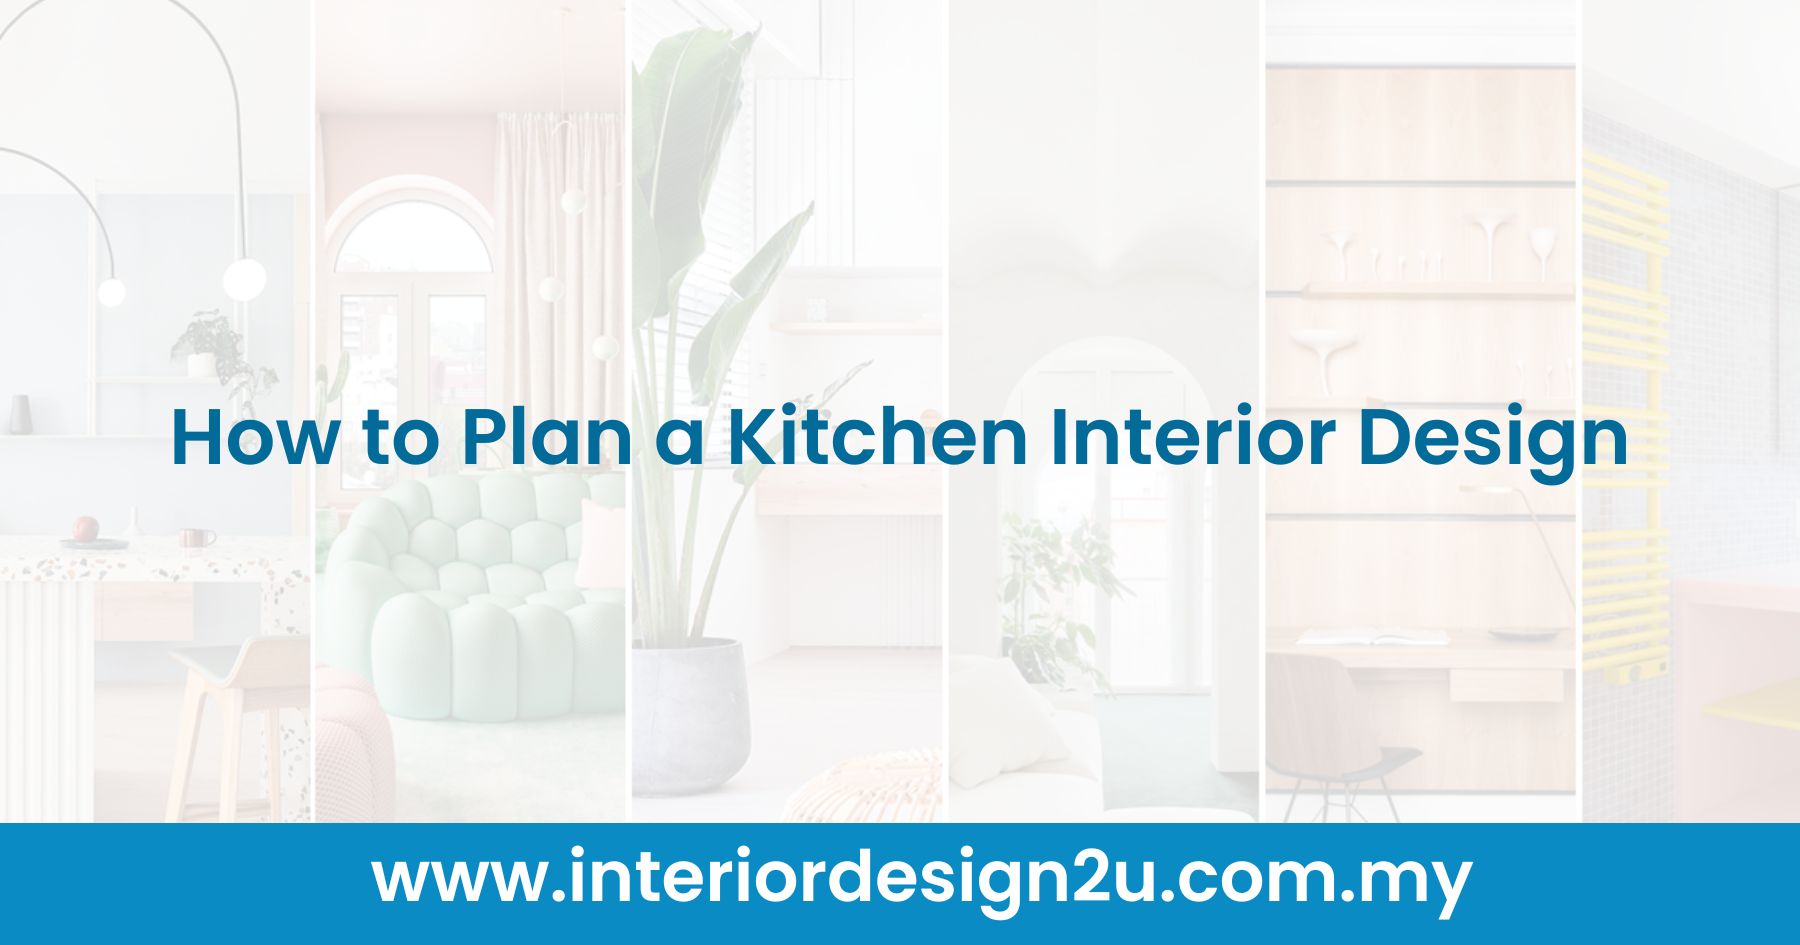 How to Plan a Kitchen Interior Design